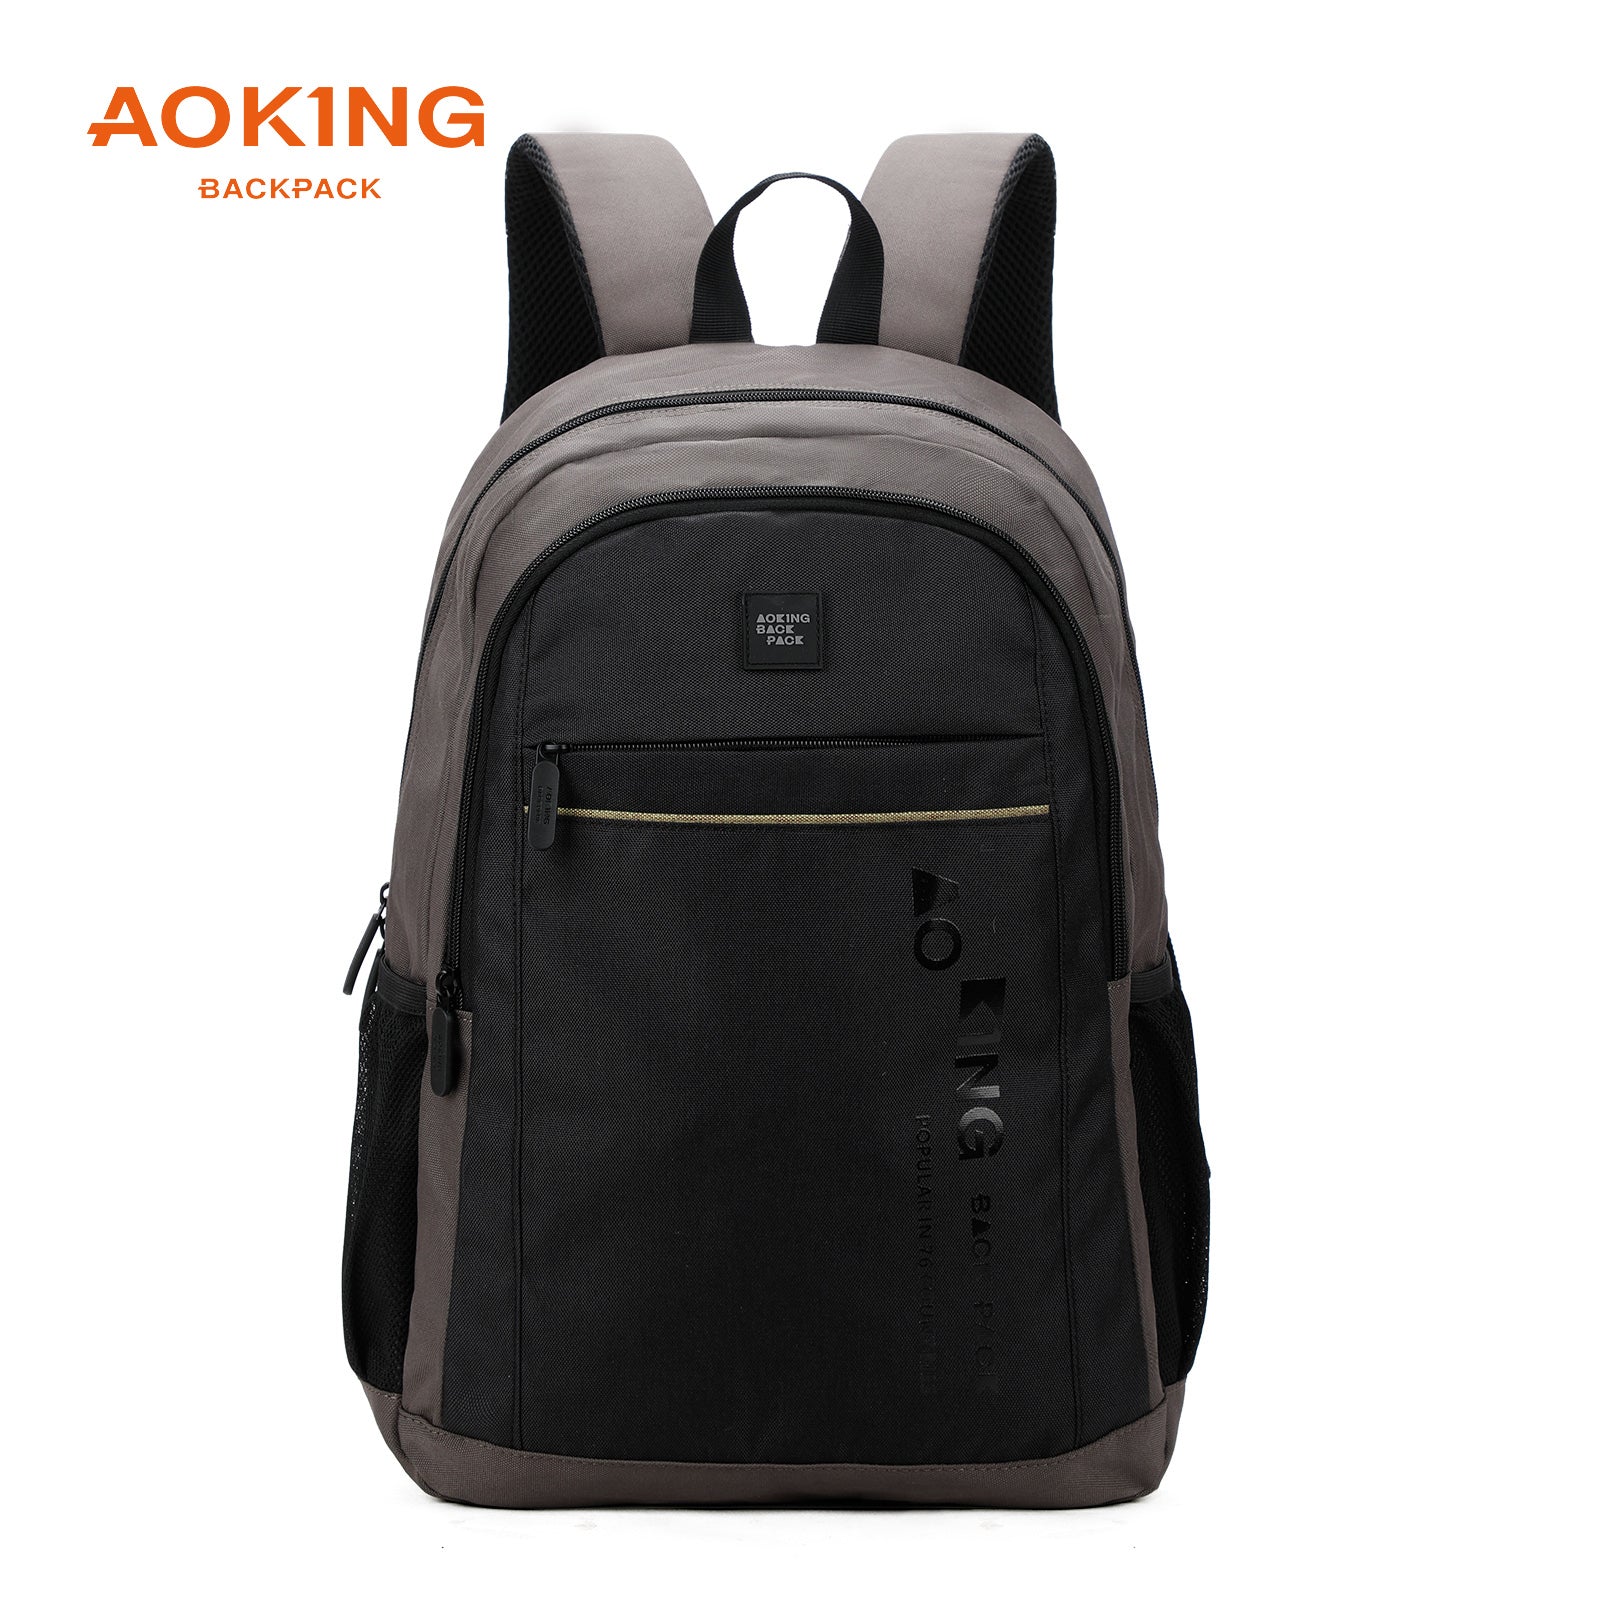 Aoking Backpack Casual Backpack Student Bag XN3316-10